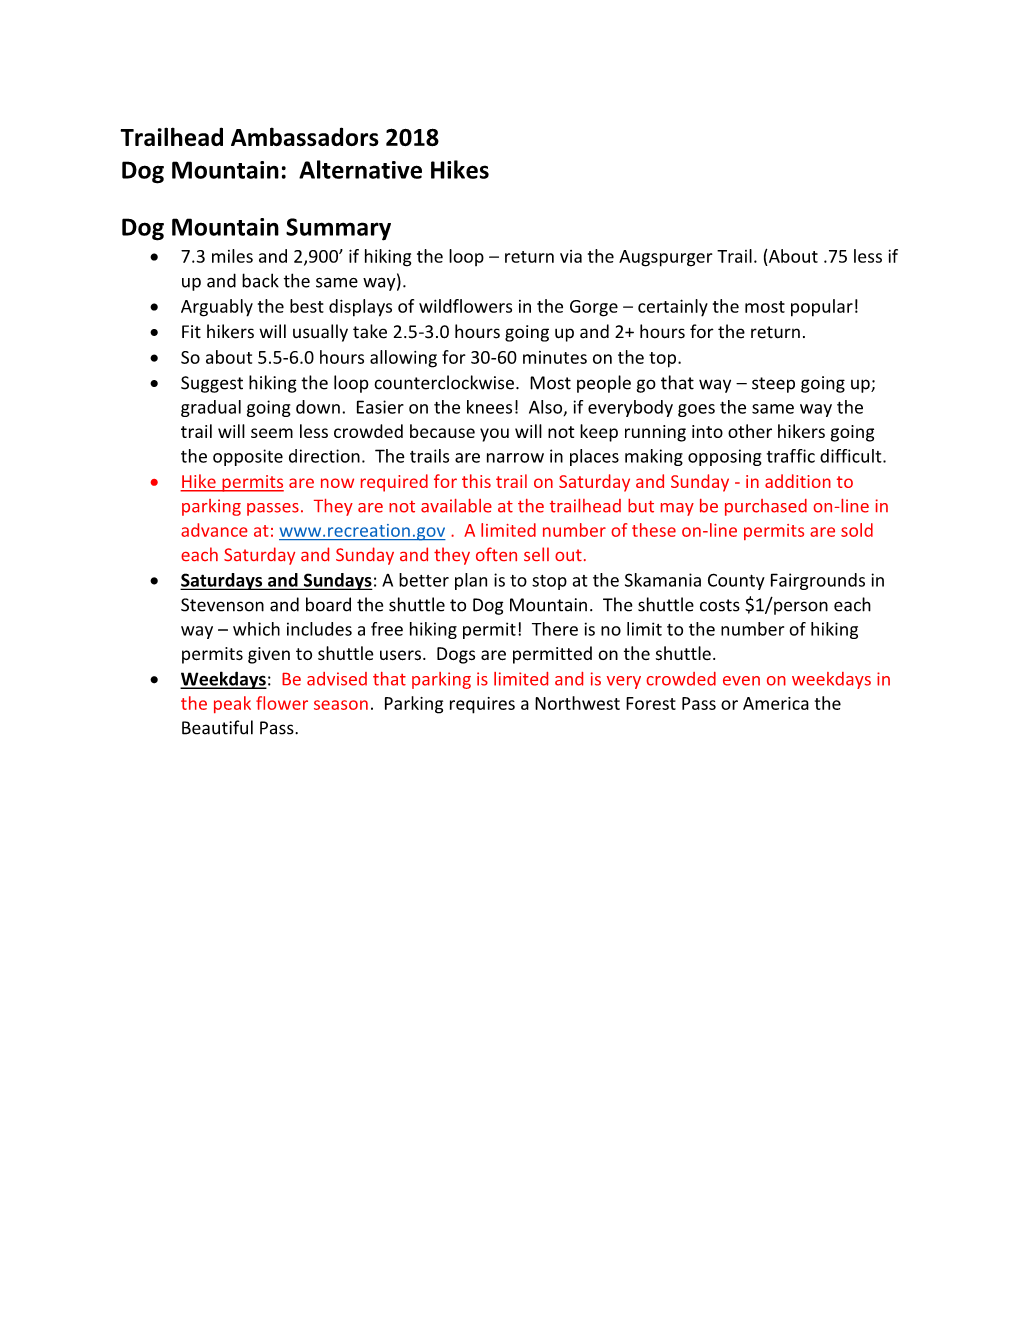 Alternative Hikes Dog Mountain Summary